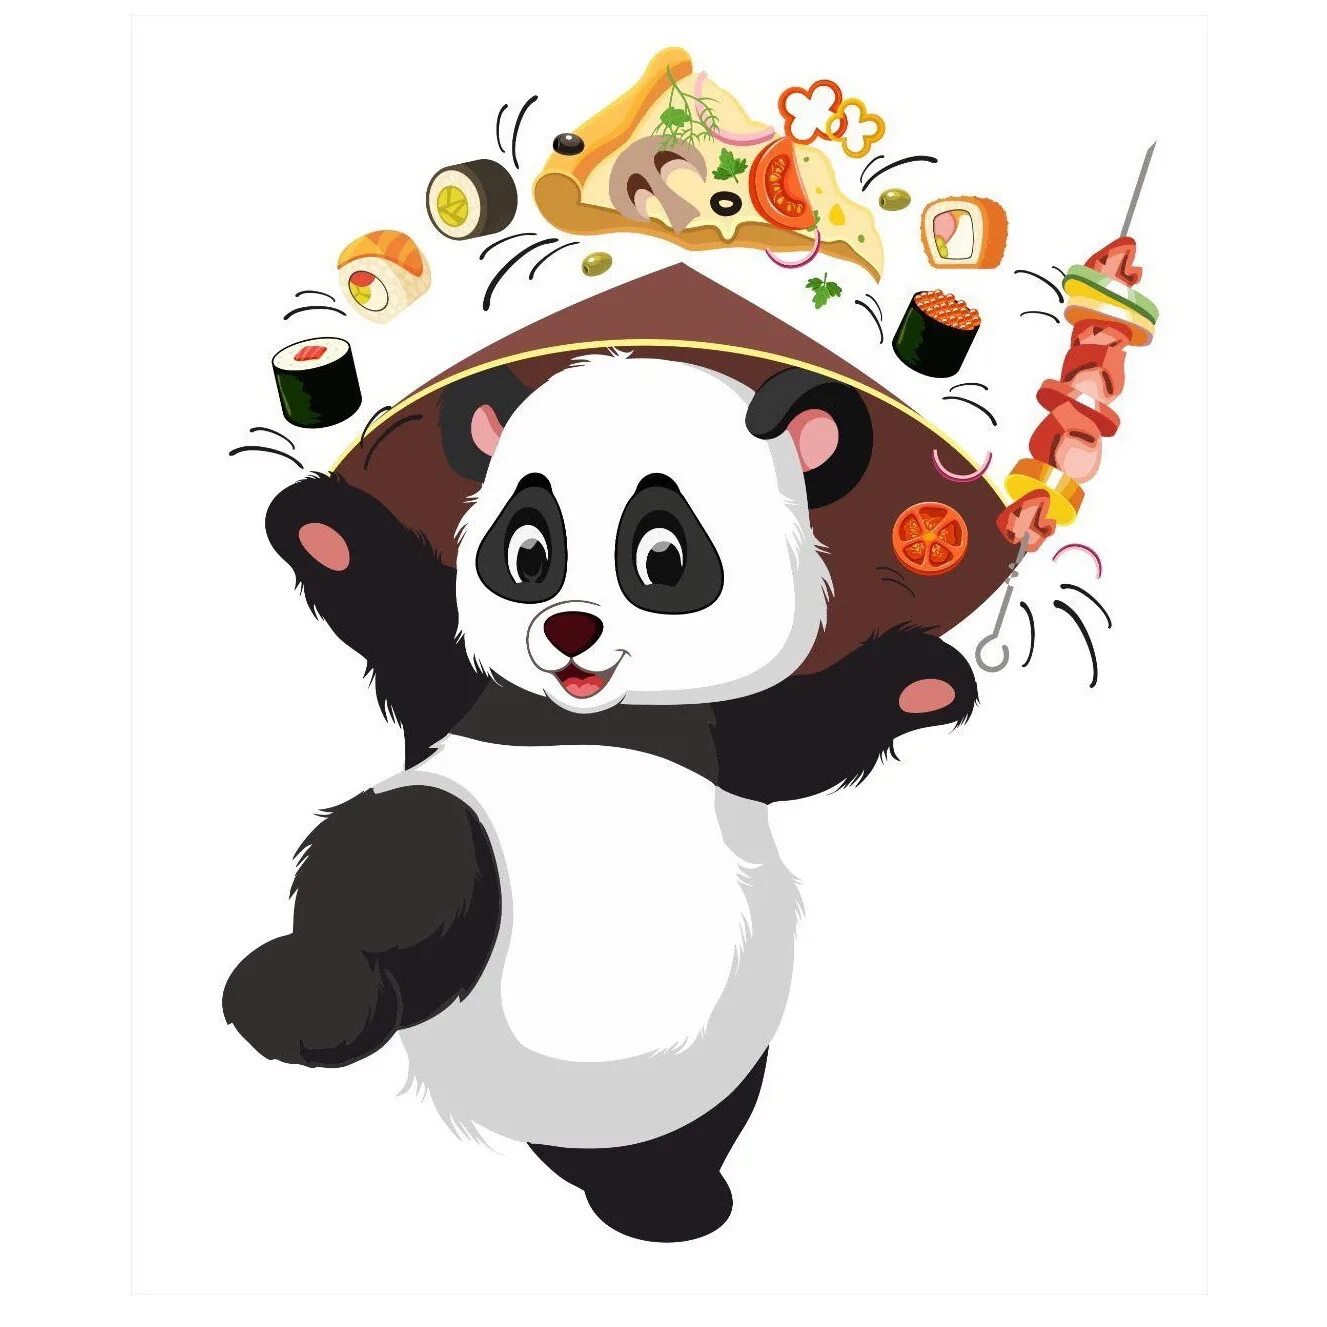 Панда таджикски. Панда. Панда иллюстрация. Панда роллы. Суши Панда логотип.